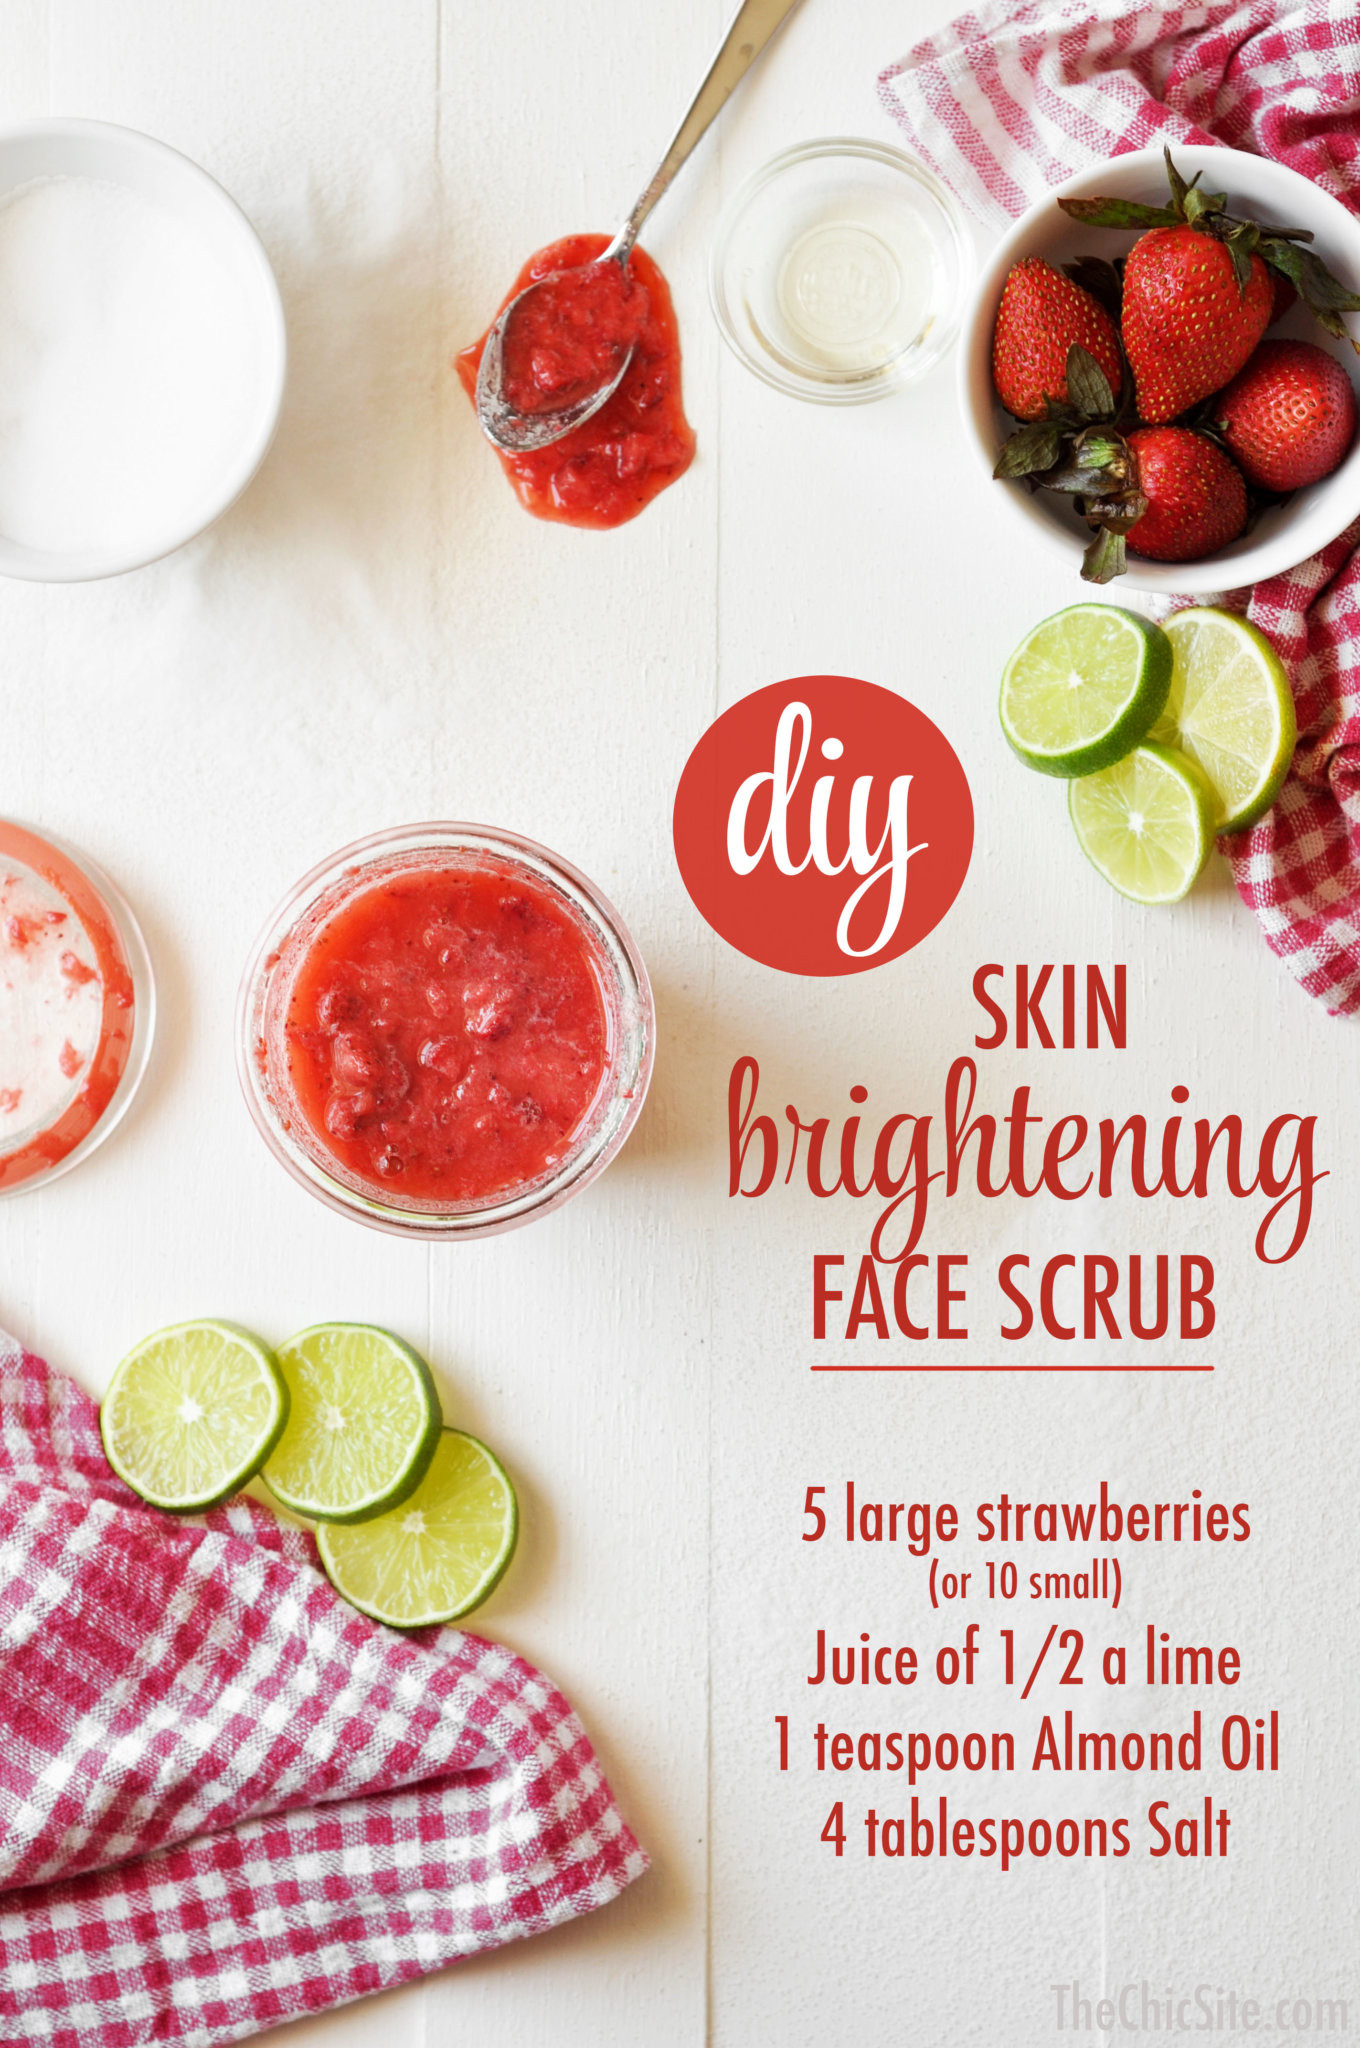 Best ideas about Face Scrub DIY
. Save or Pin DIY Skin Brightening Face Scrub Now.